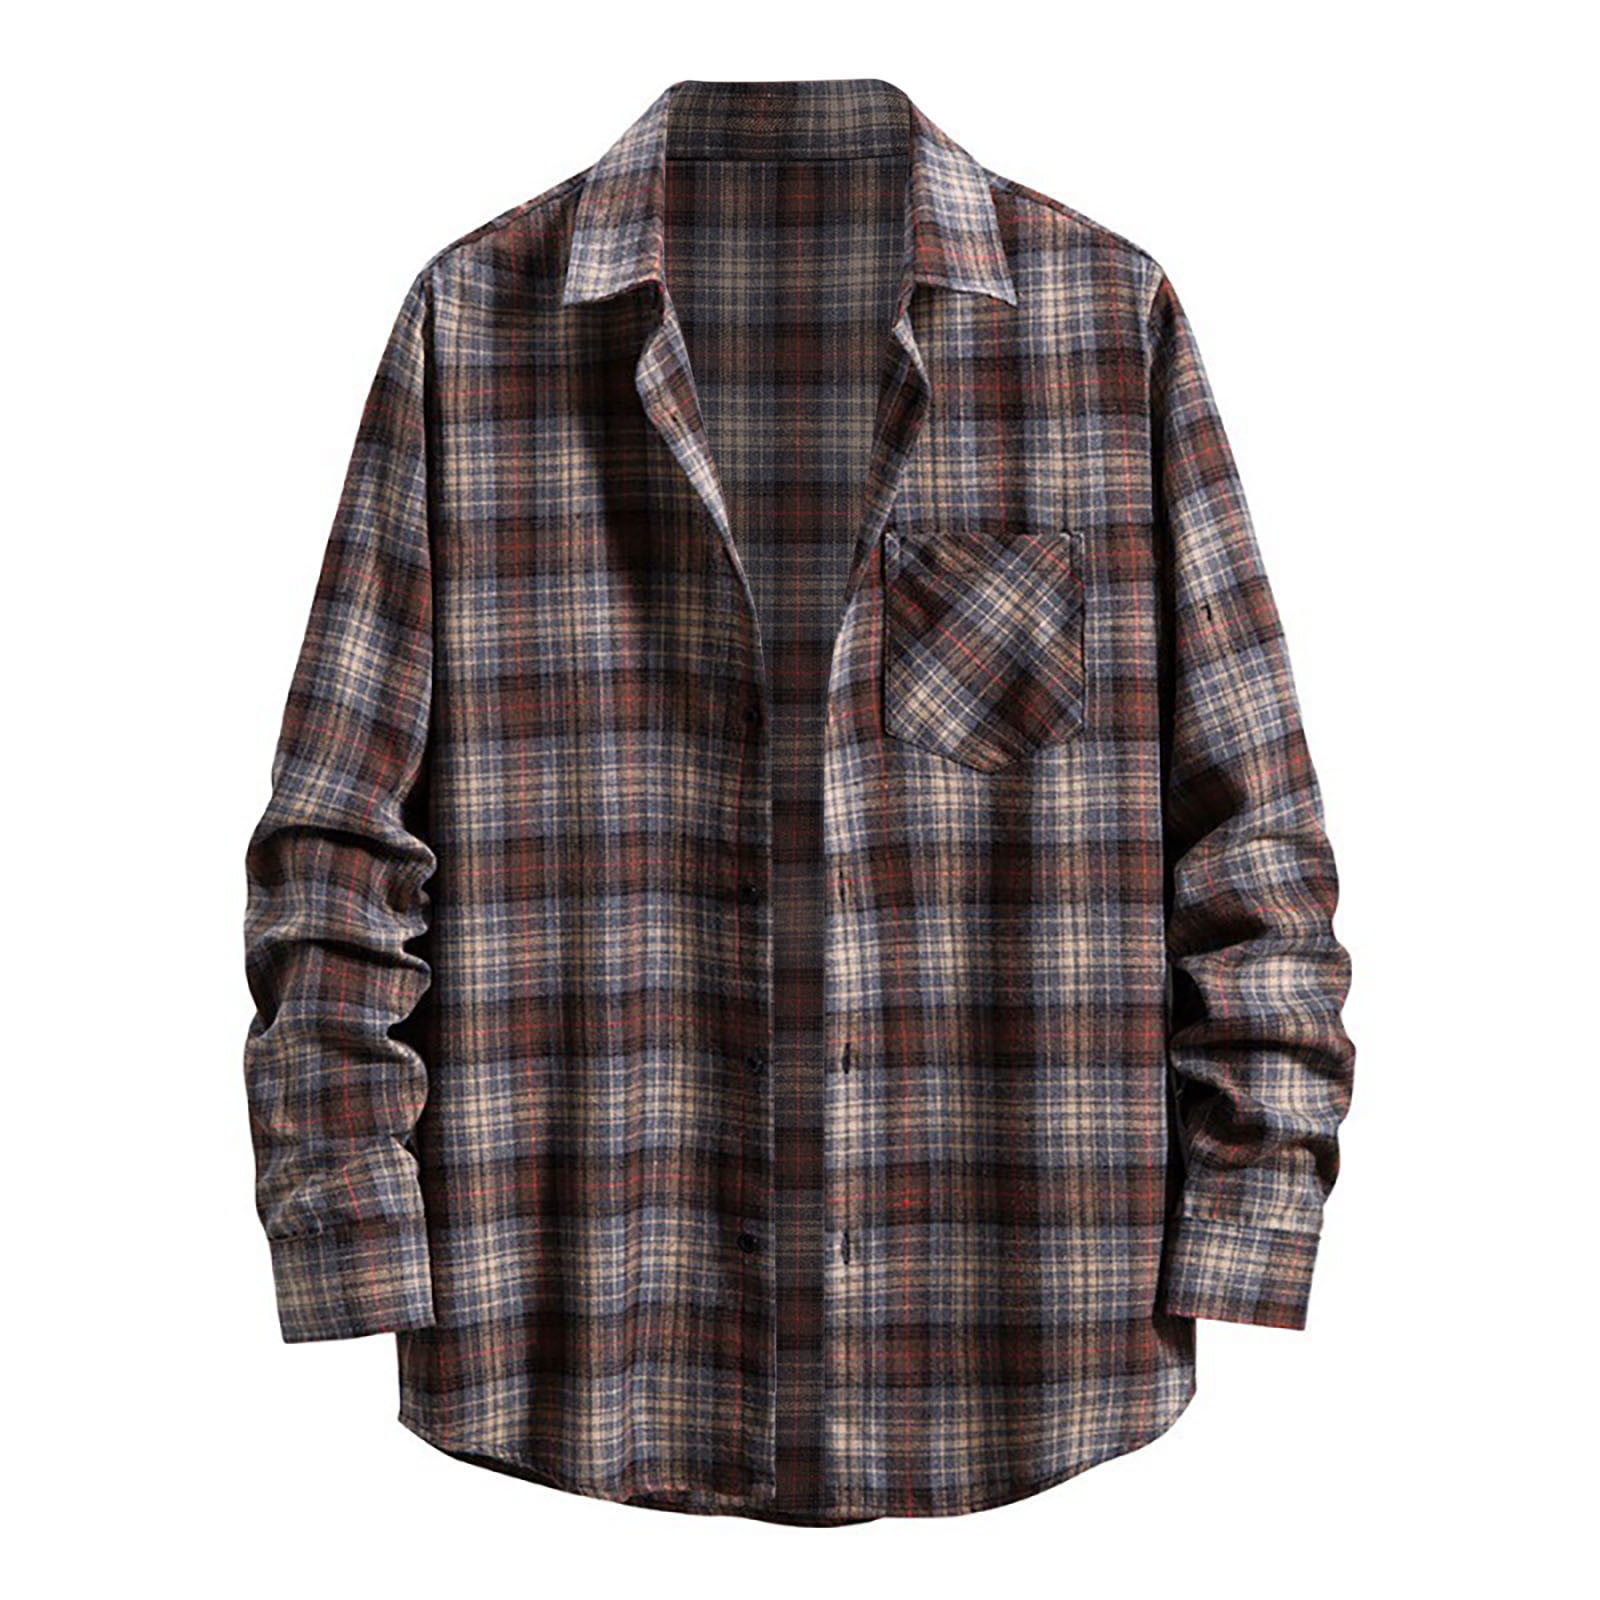 DDAPJ pyju Men's Causal Flannel Plaid Shirts Clearance Sales ...